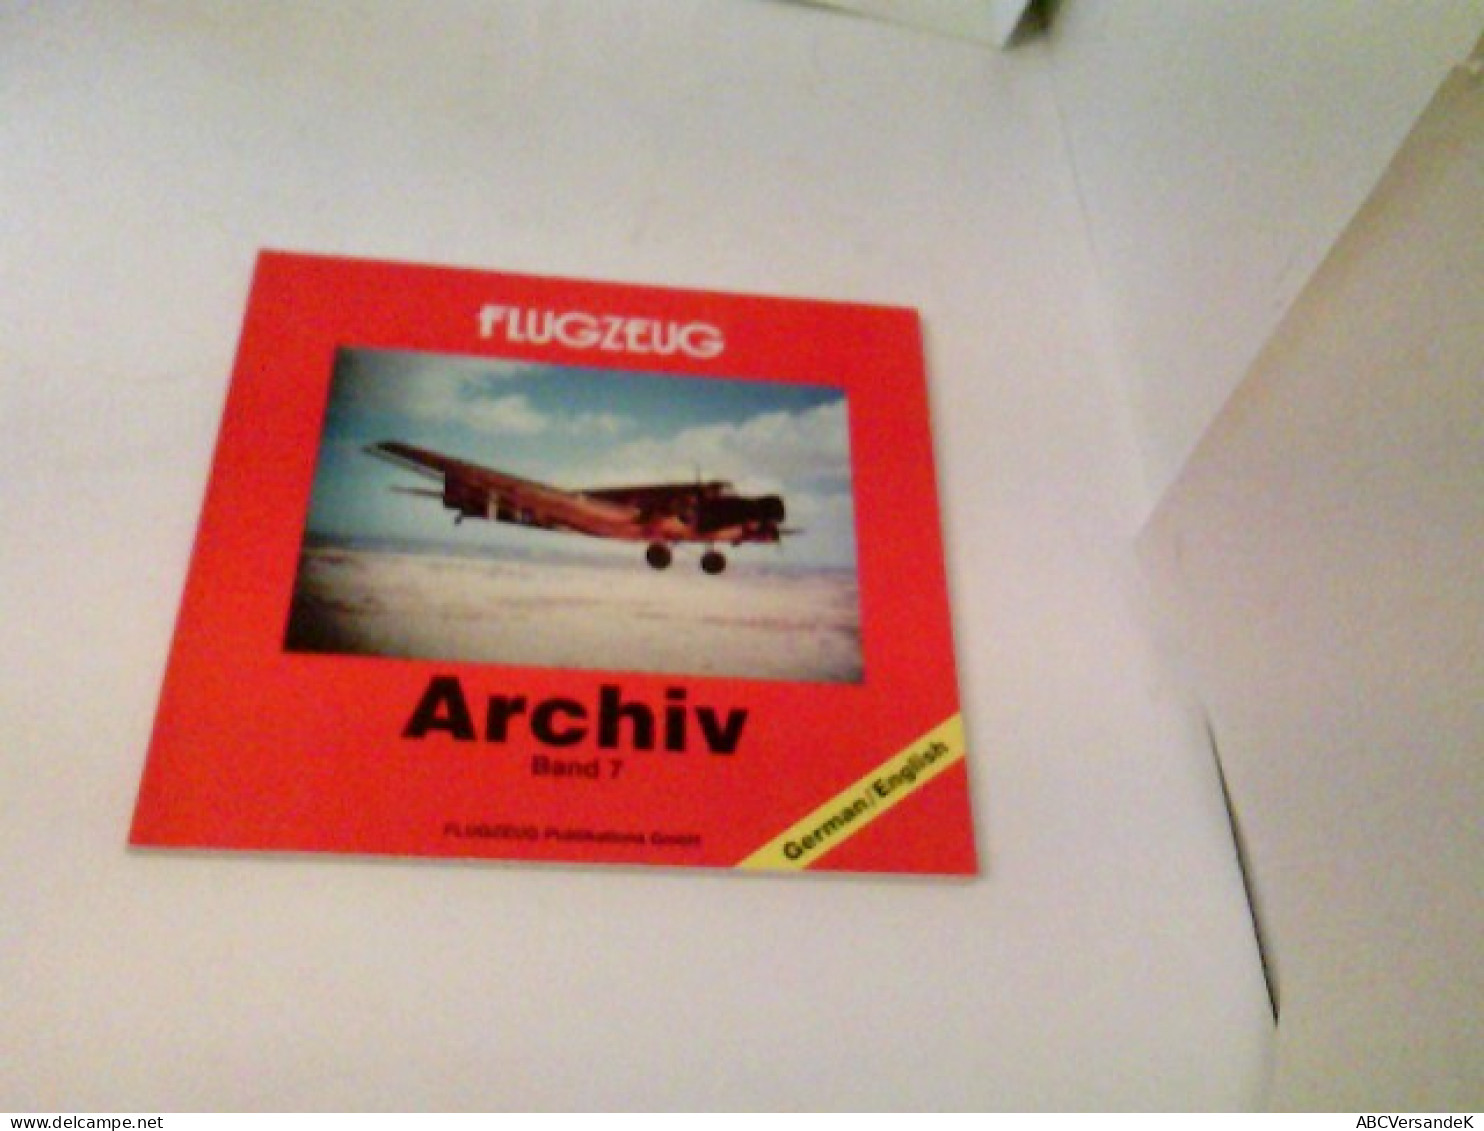 Flugzeug Archiv Band 7 - Transporte